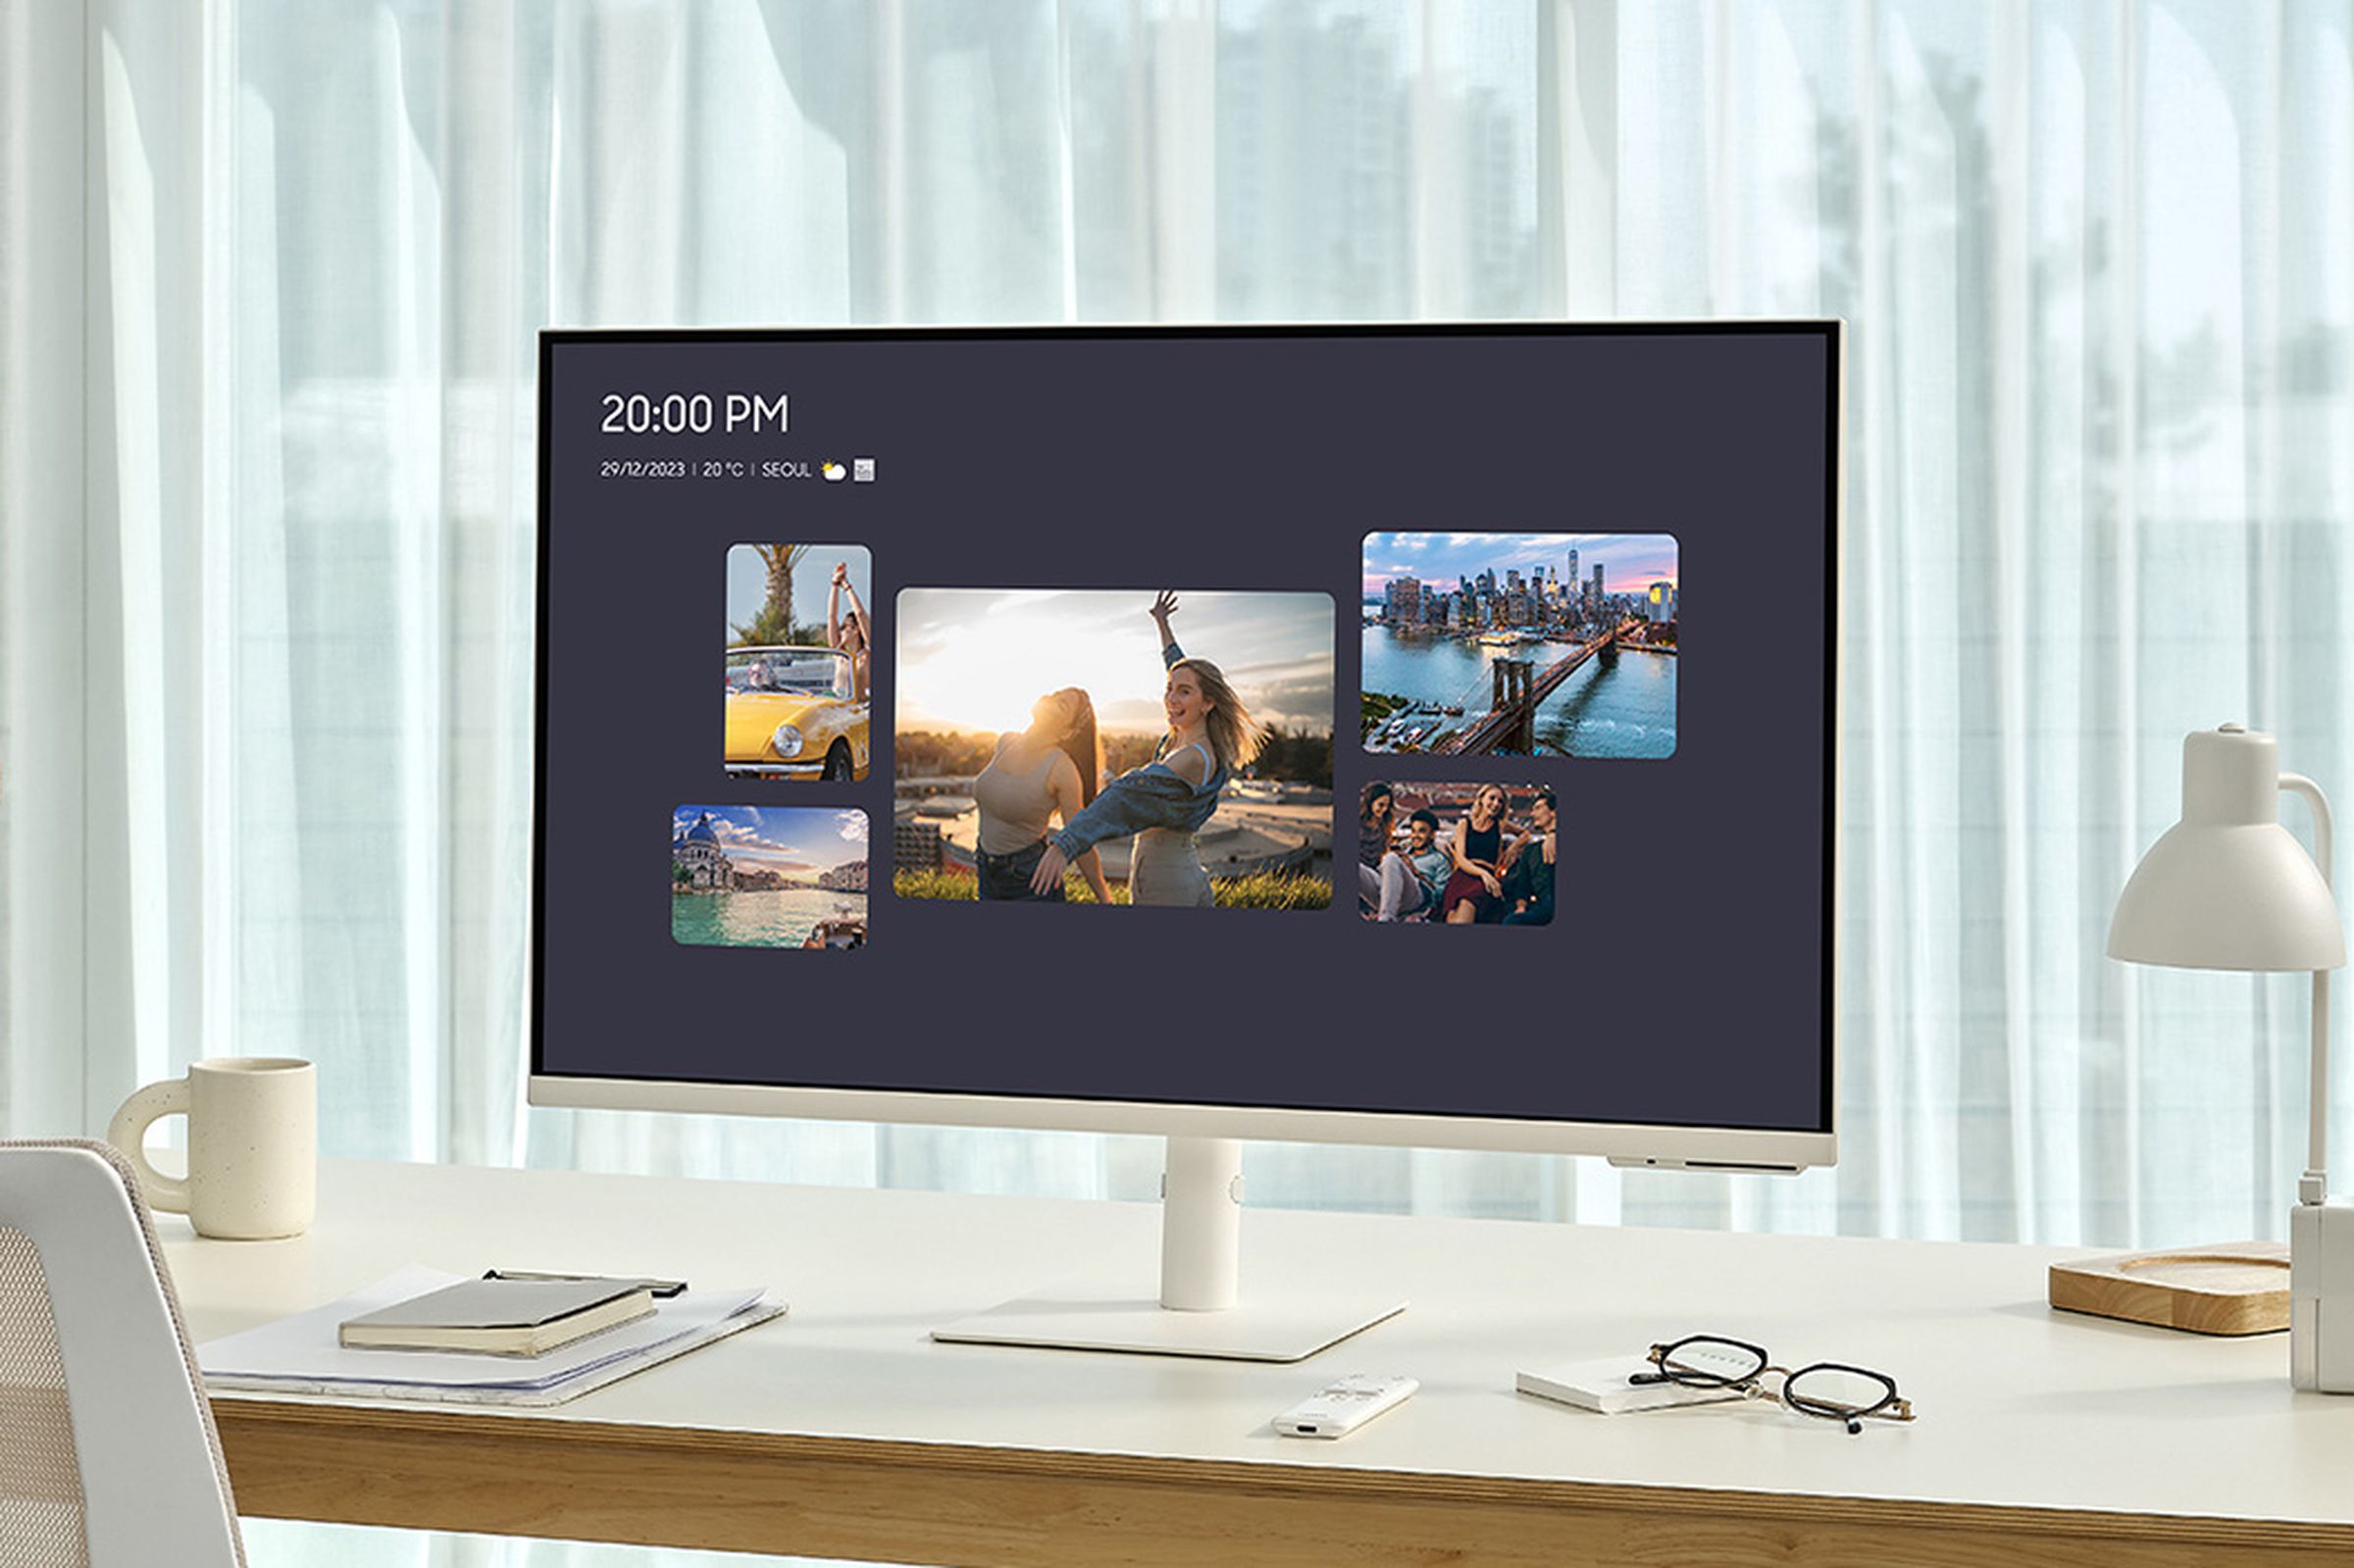 Samsung monitor on a desk.